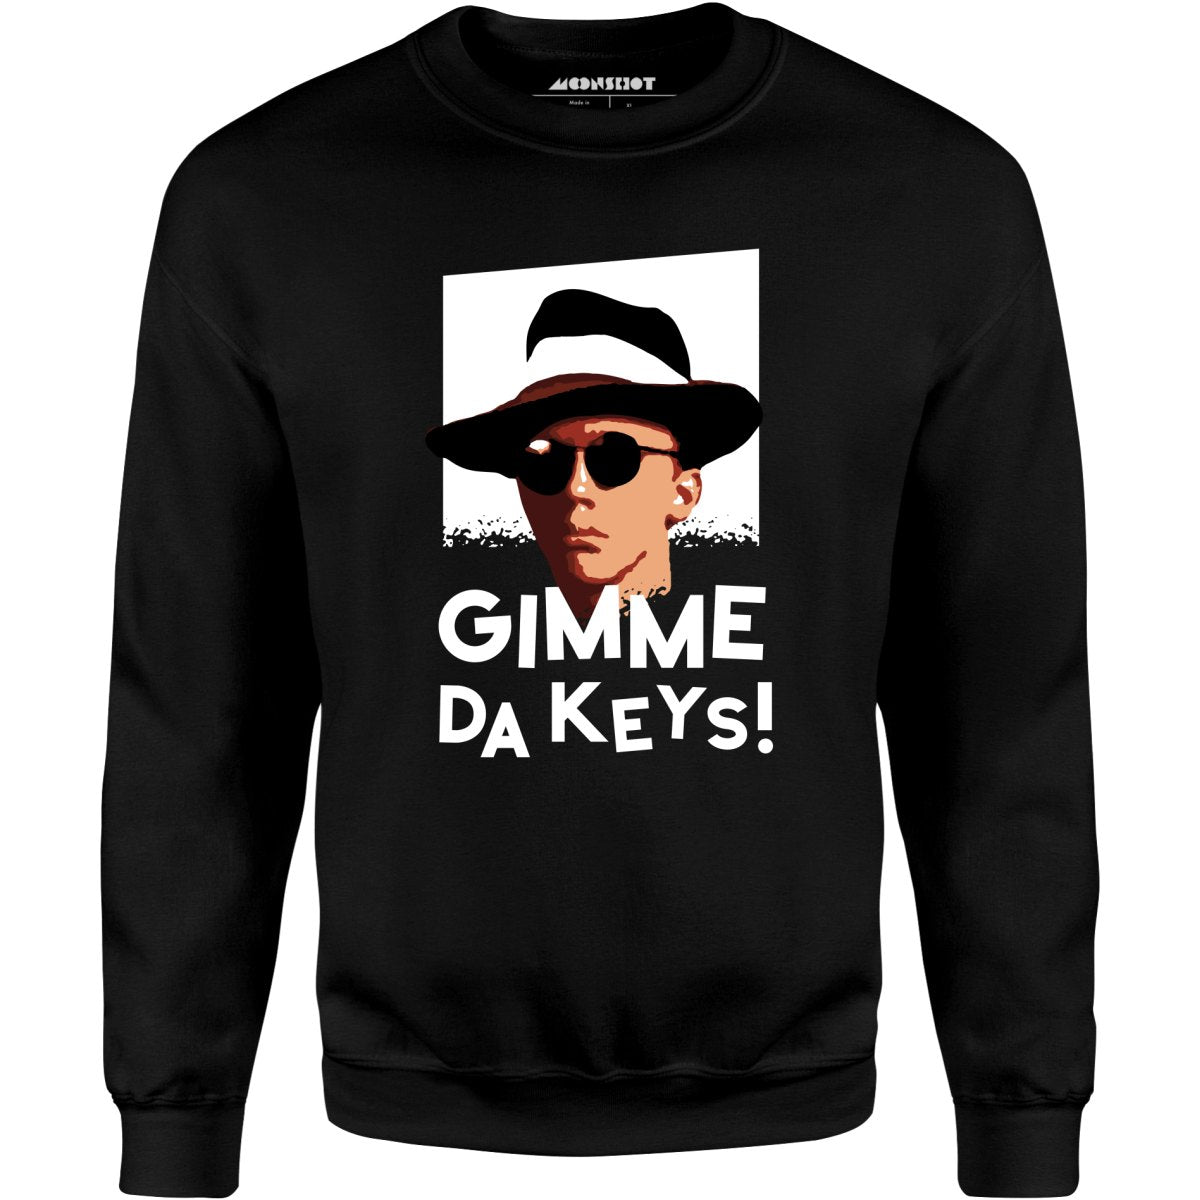 Gimme Da Keys! - Unisex Sweatshirt